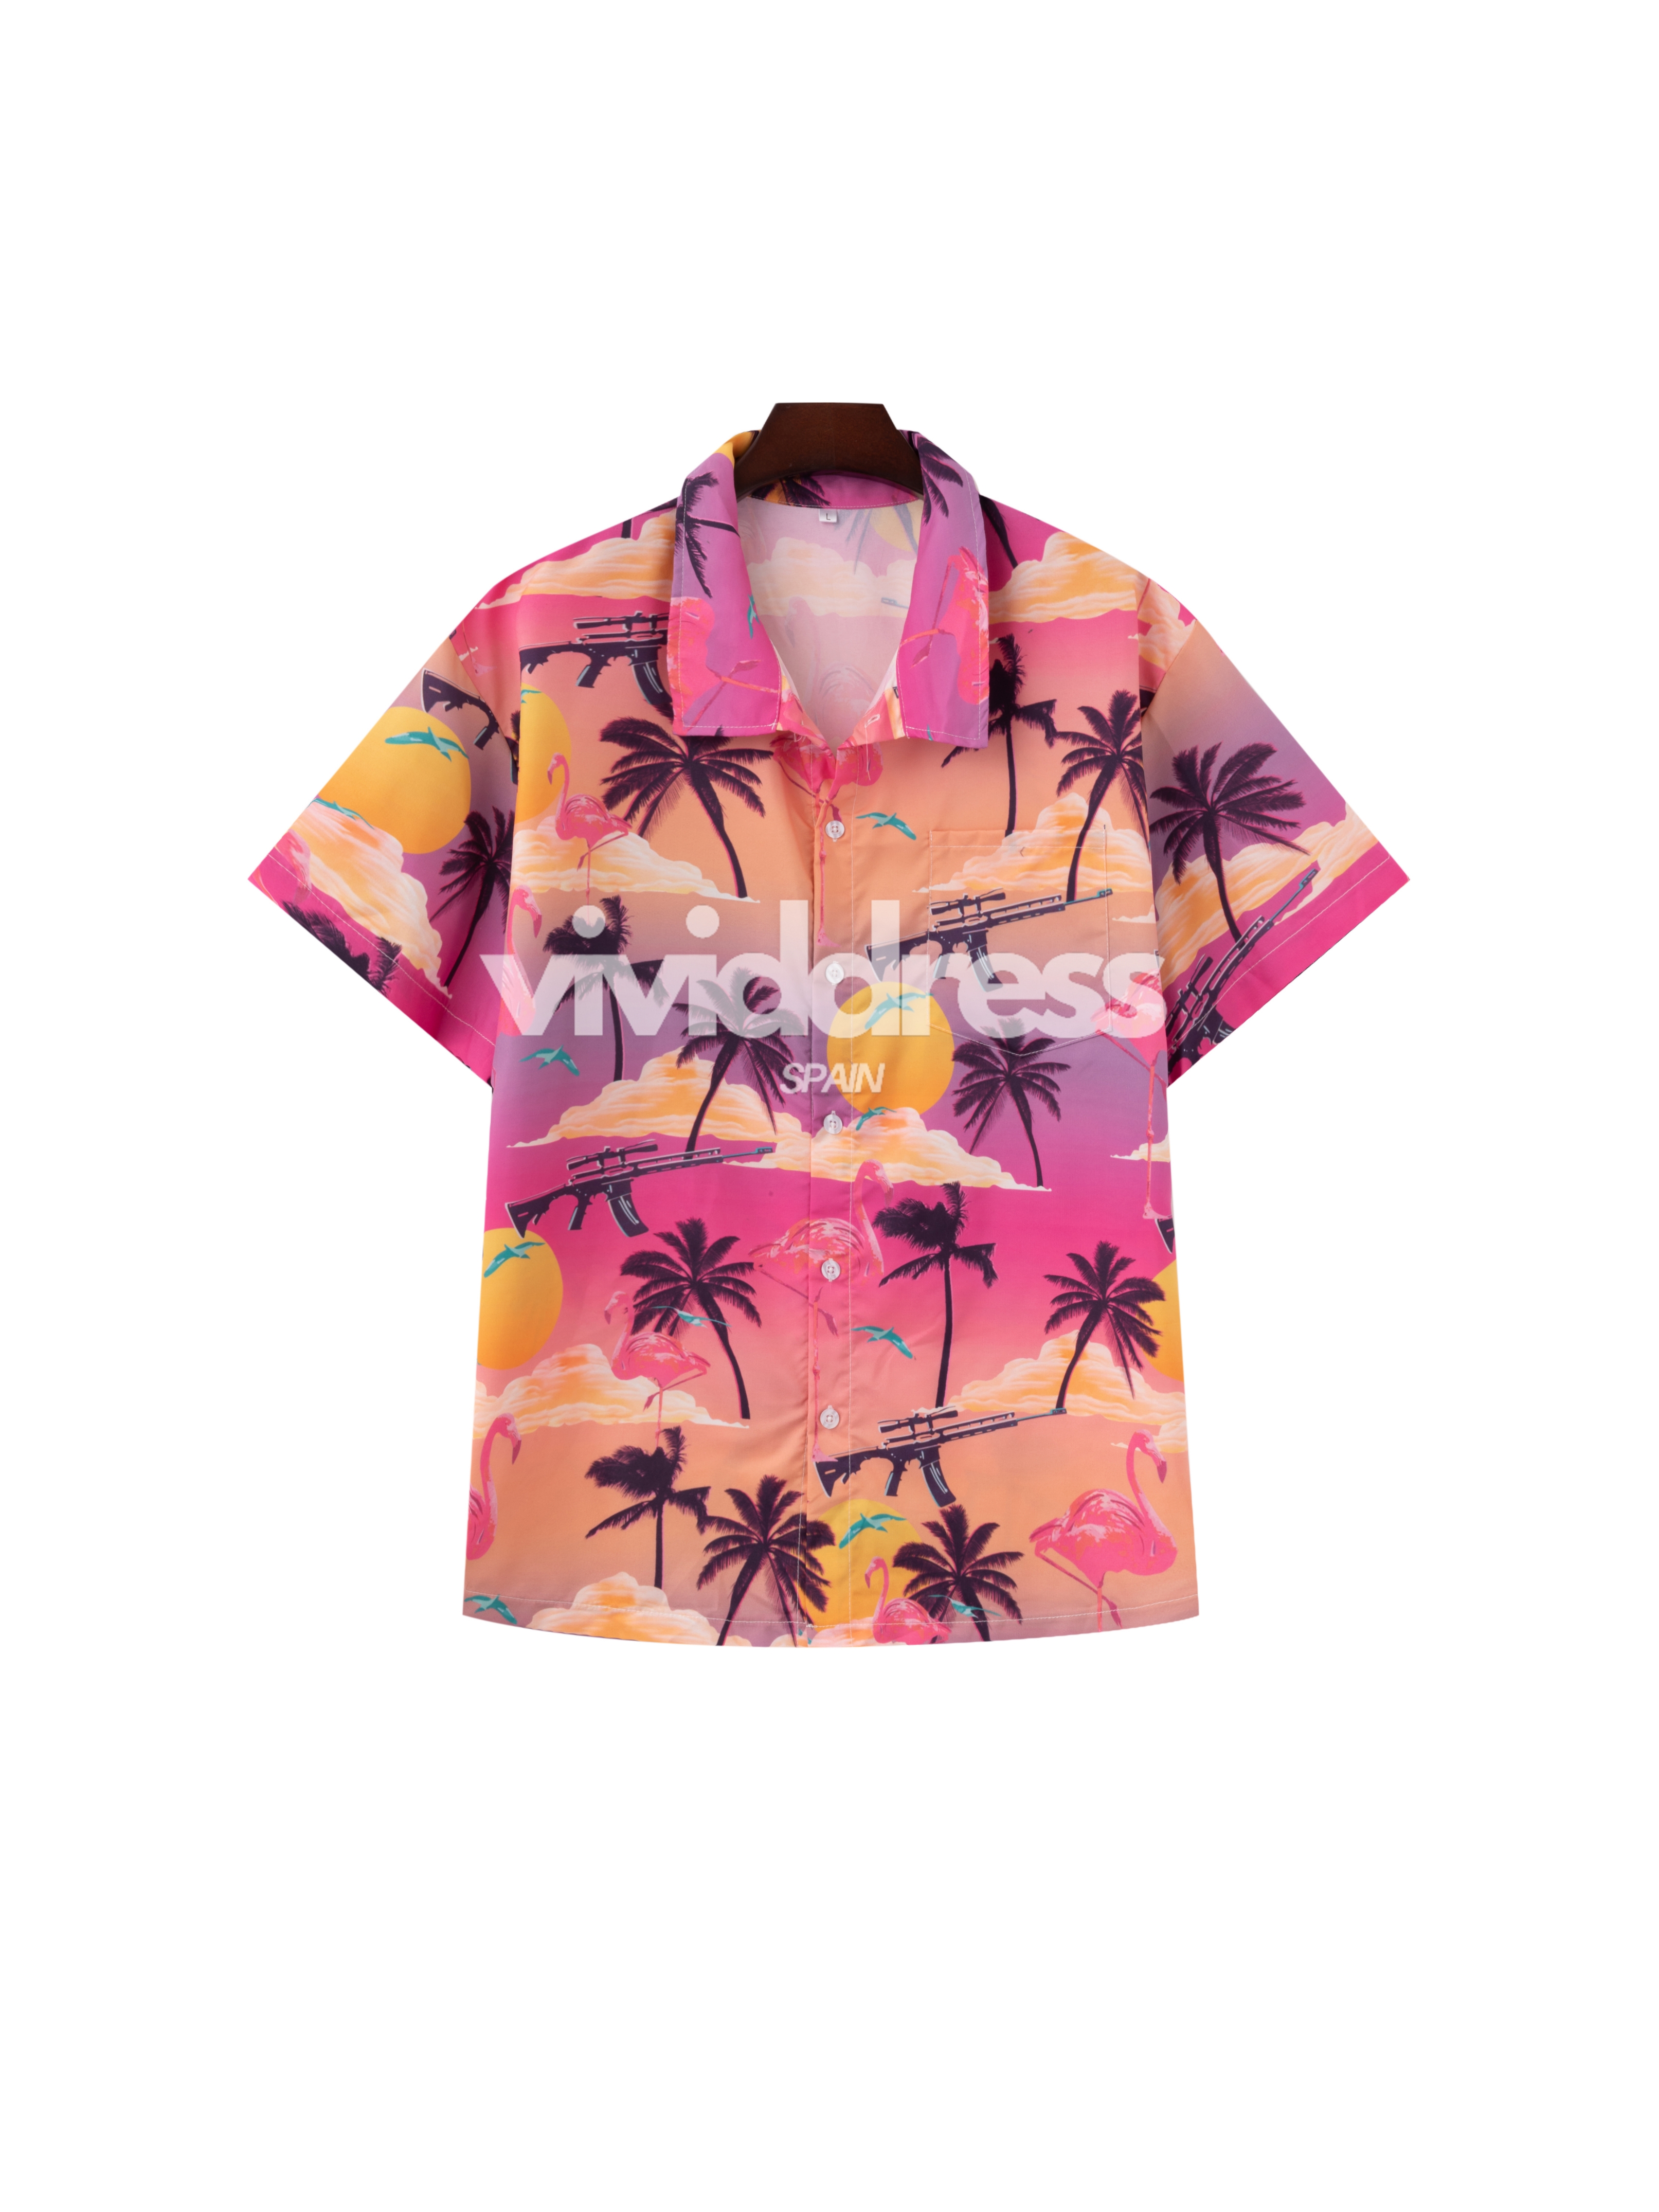 Men's Gun & Flamingo Print Beach Hawaiian Holiday Short Sleeve Shirt